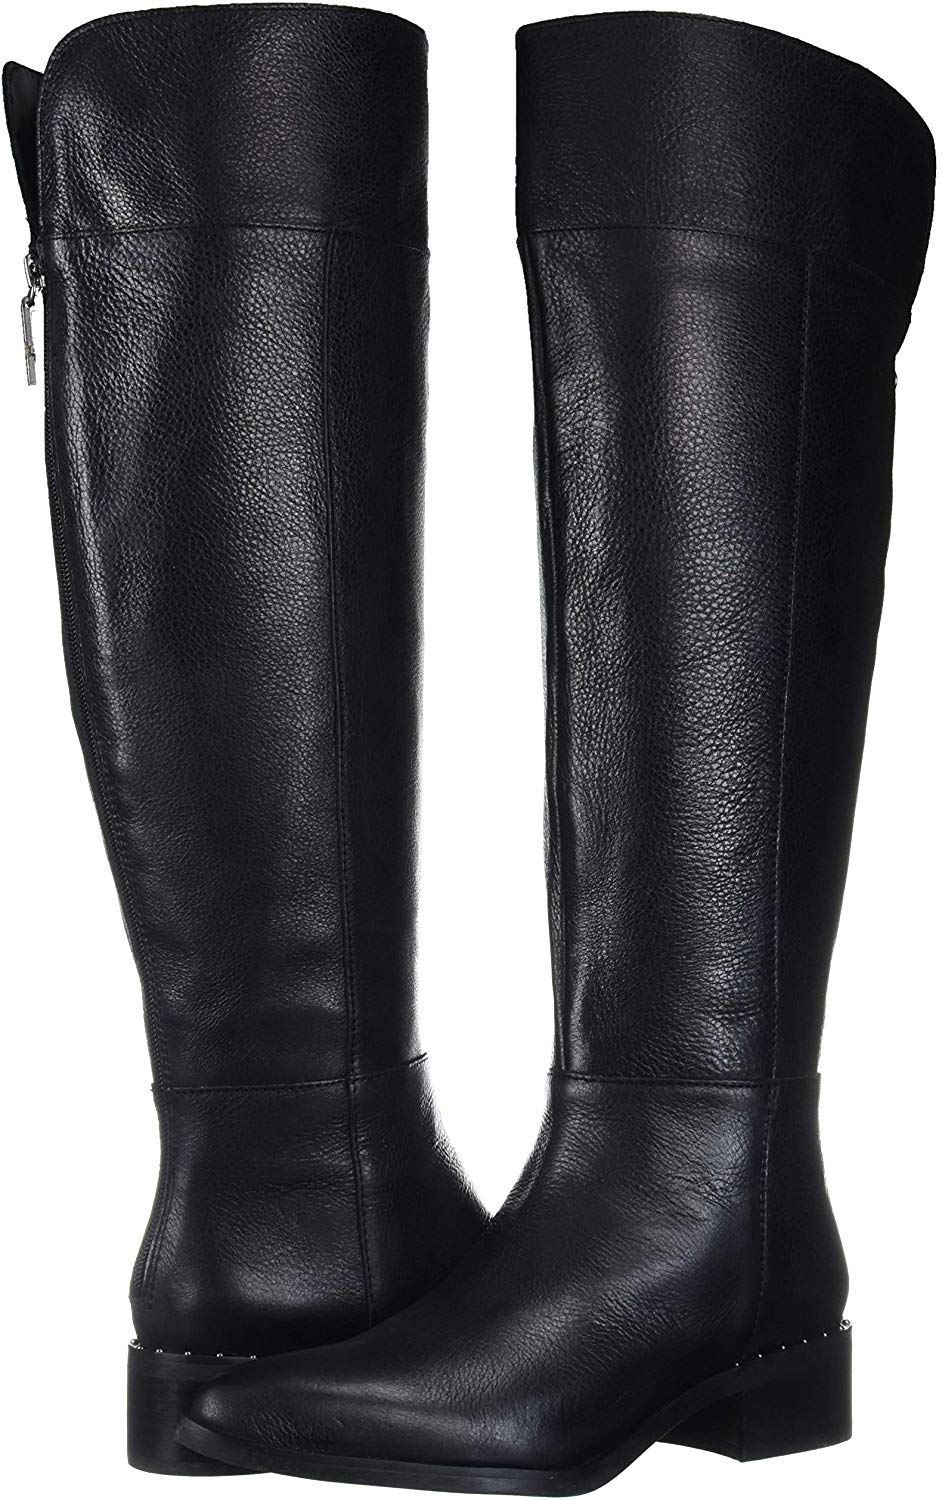 Knee Boot, Black, Size 8.0 